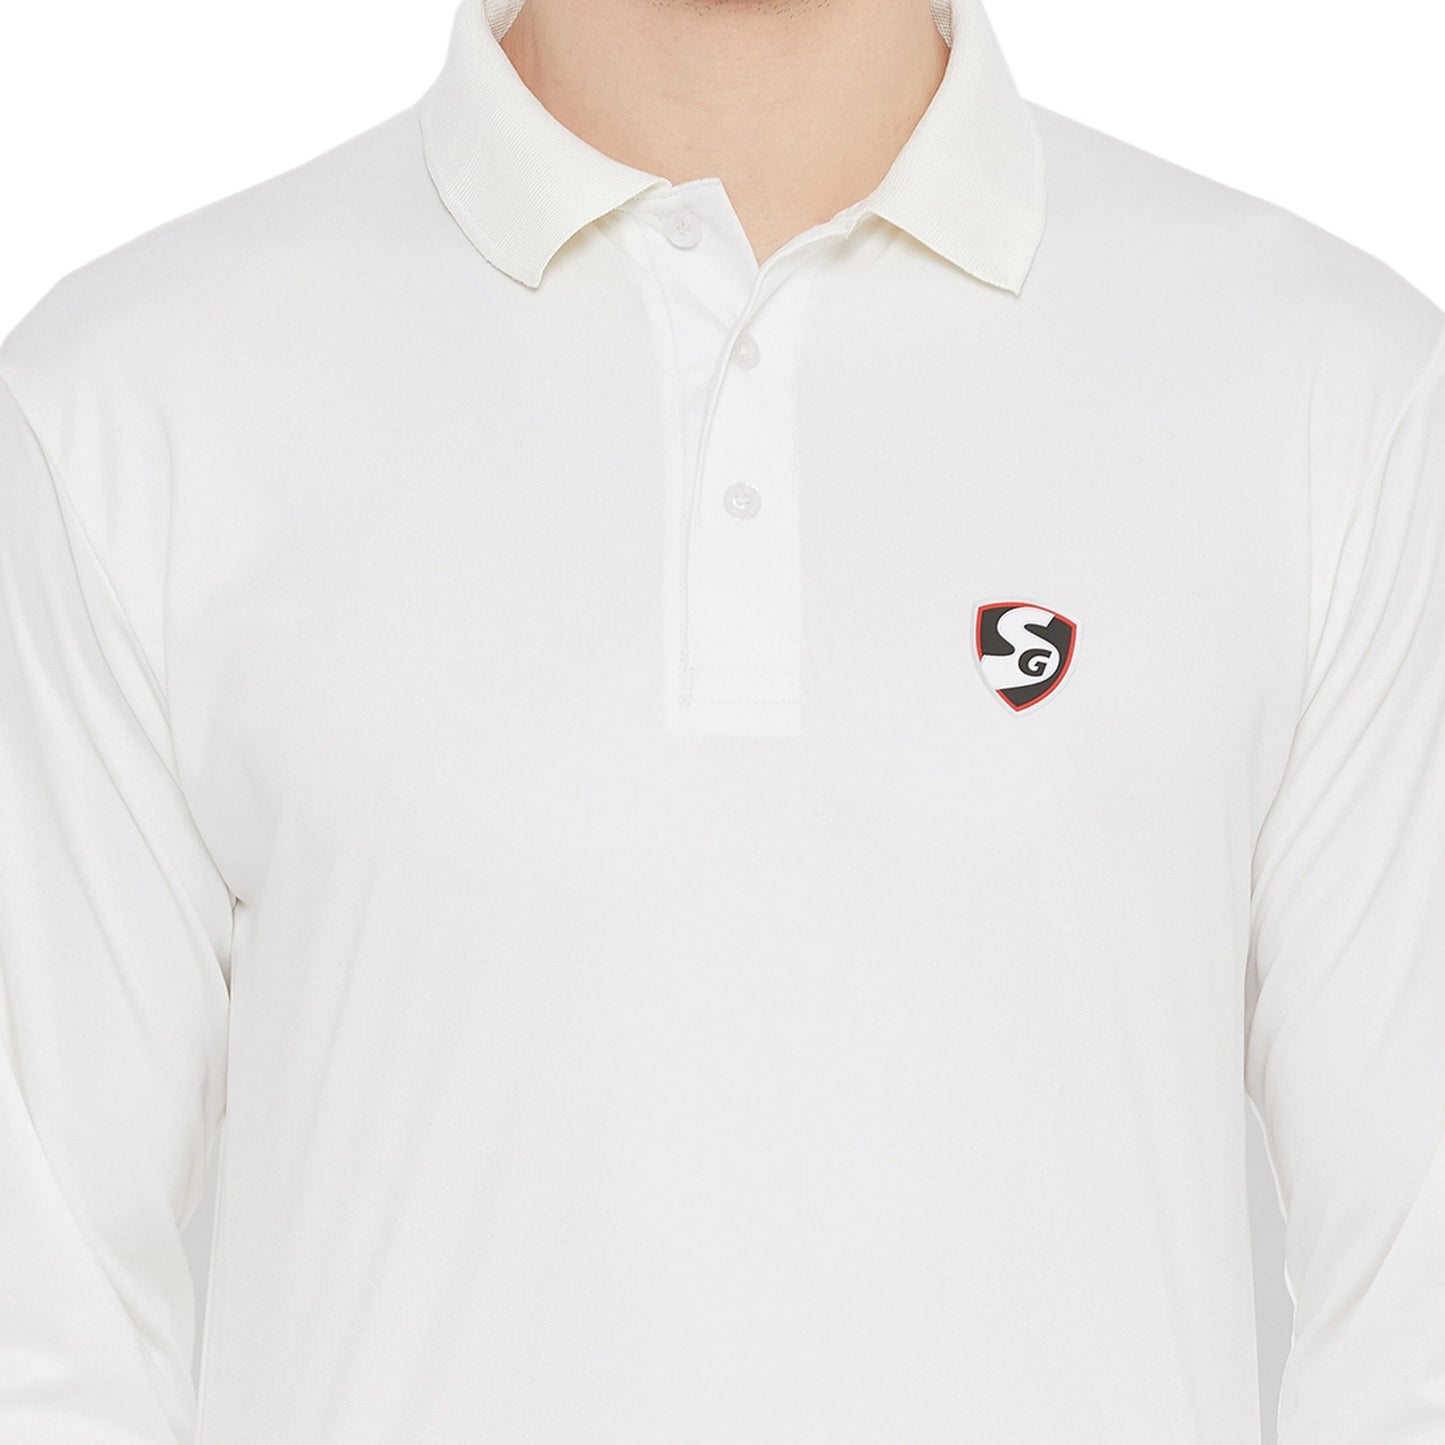 SG Club Full Sleeves Cricket T-shirts for Juniors - Best Price online Prokicksports.com